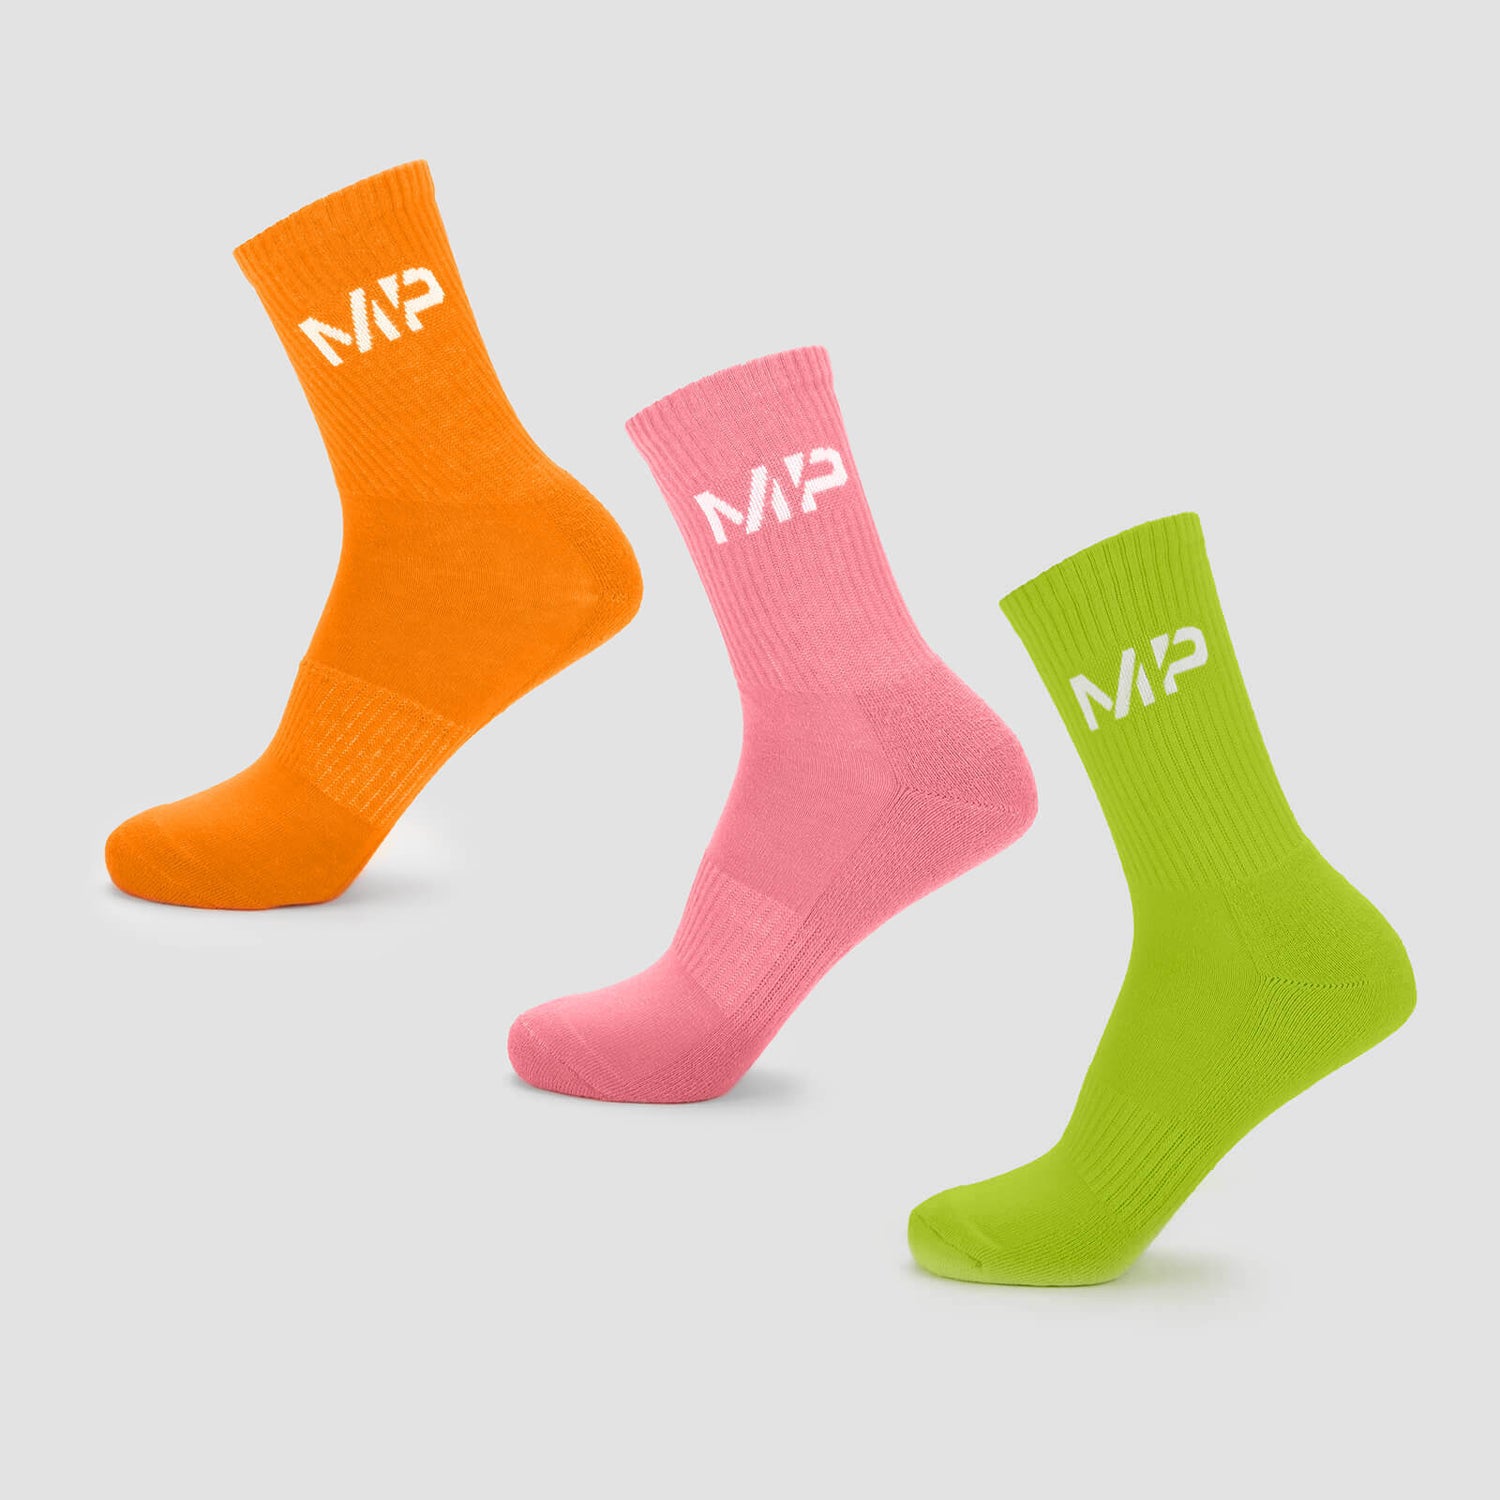 MP Men's Neon Brights Crew Socks (3 Pack) - Orange/Lime/Rose - UK 6-8